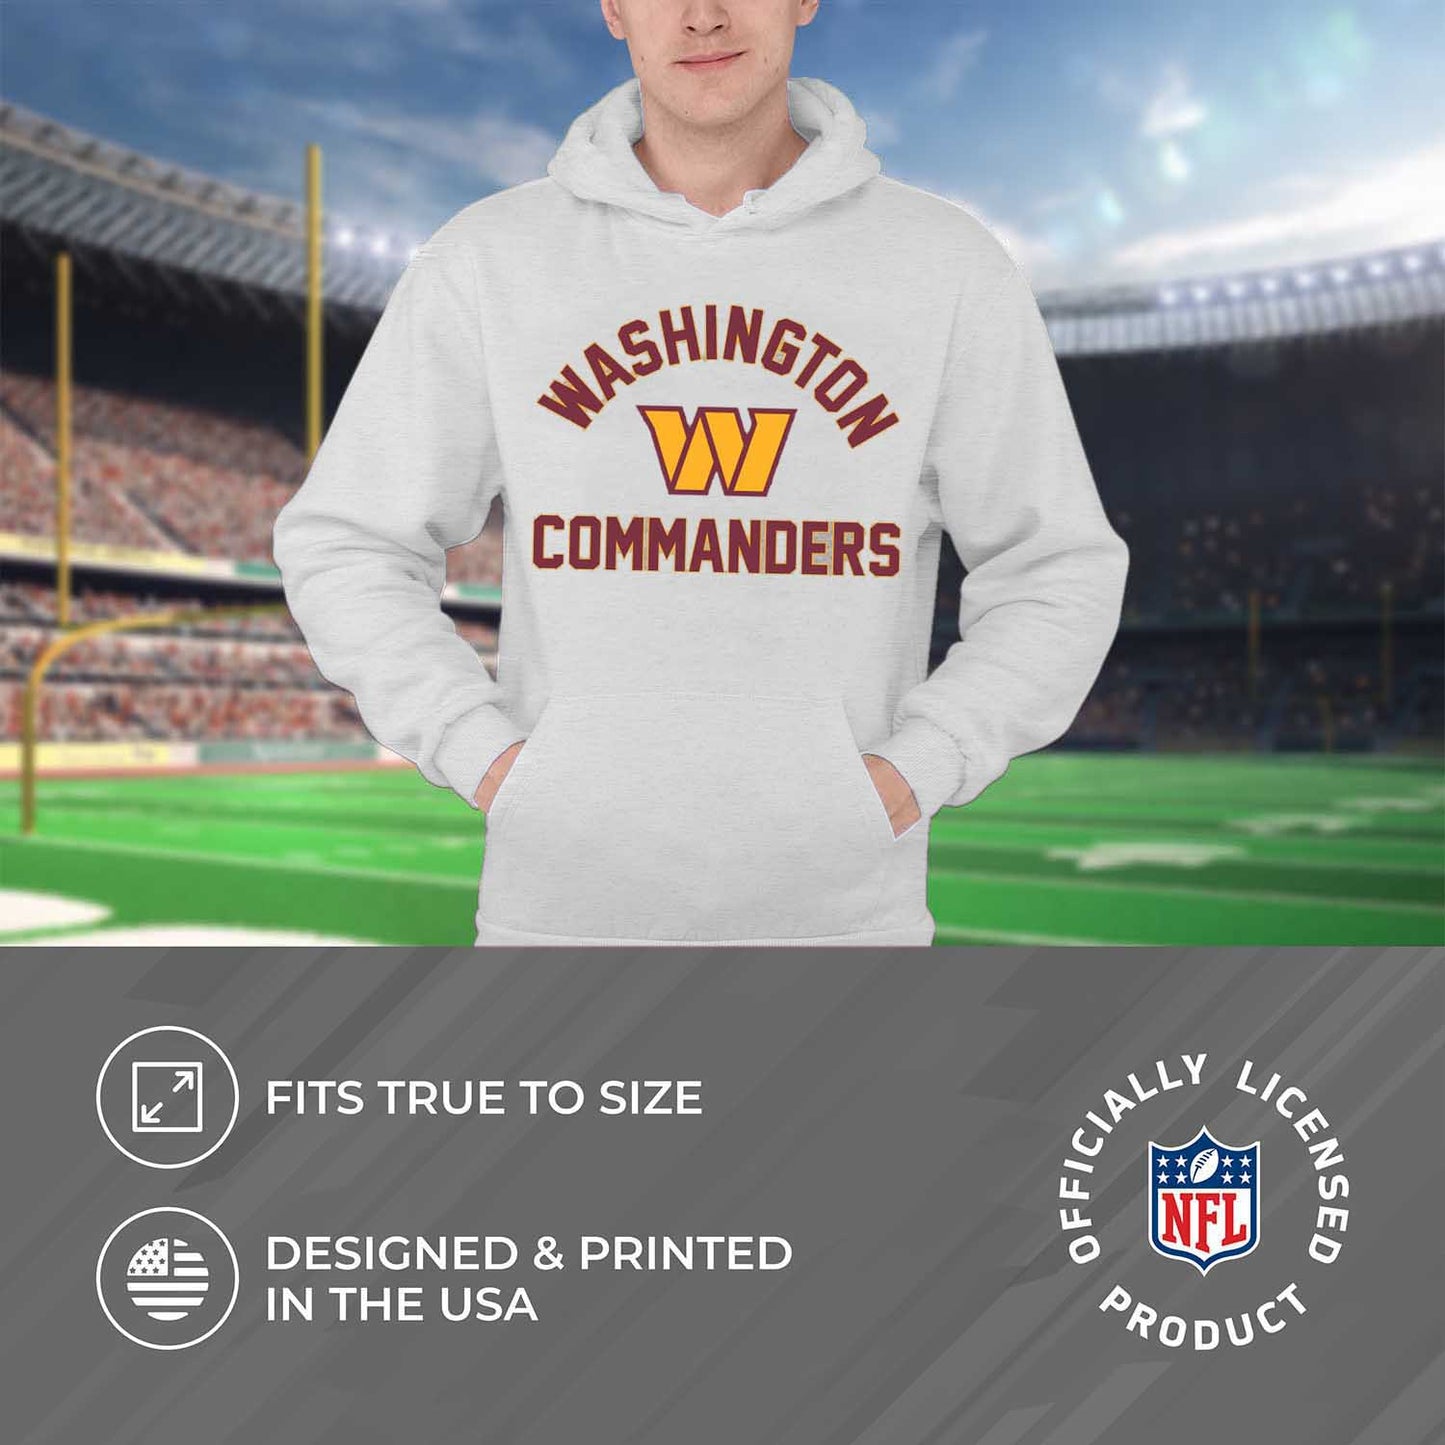 Washington Commanders NFL Adult Gameday Hooded Sweatshirt - Sport Gray